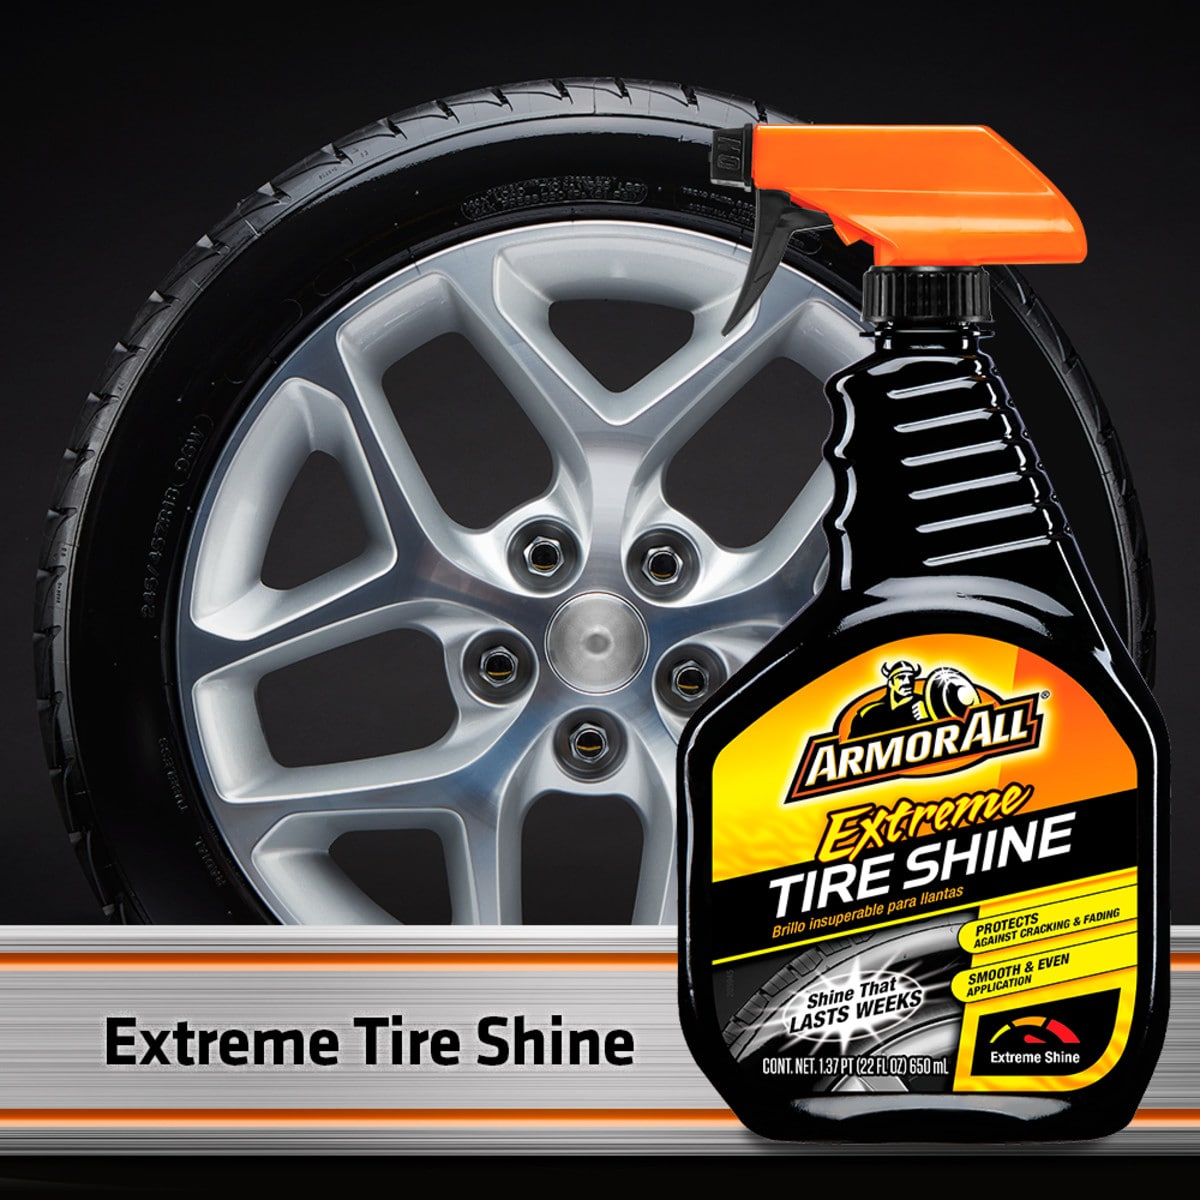 Armor All Extreme Tire Shine Spray 22-fl oz Car Exterior Wash in